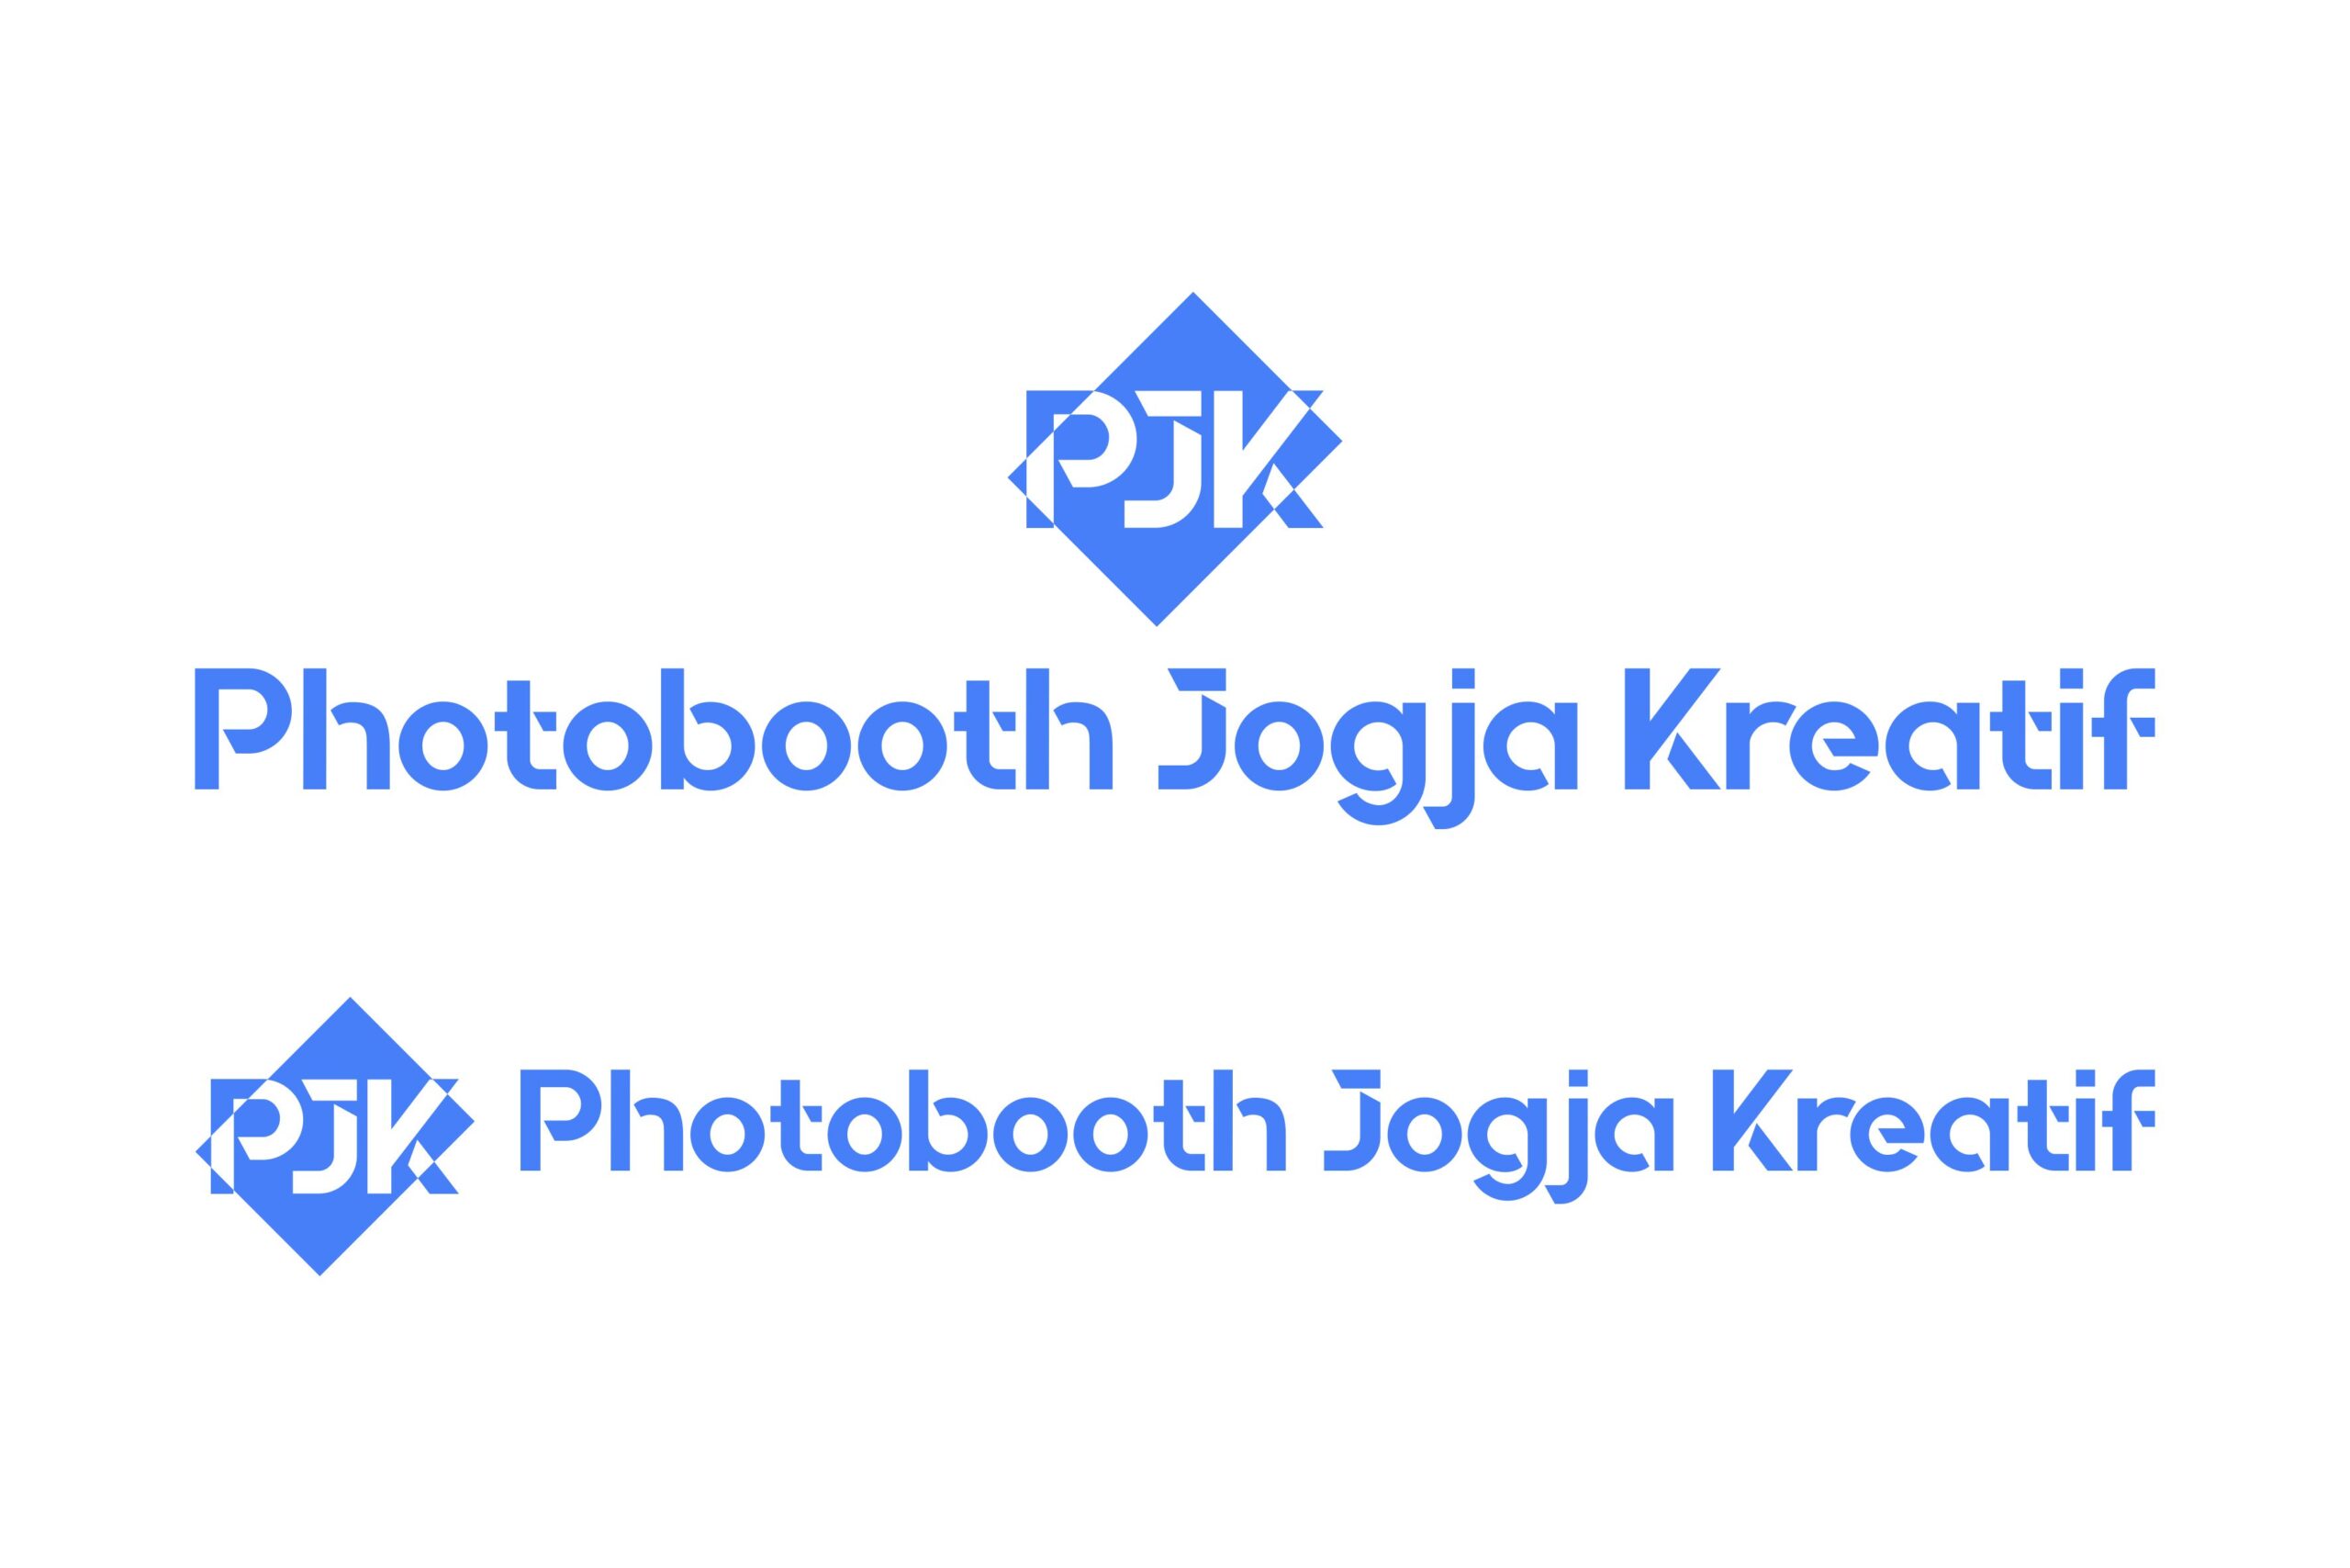 PJK Photobooth Jogja Kreatif Logo Vector scaled